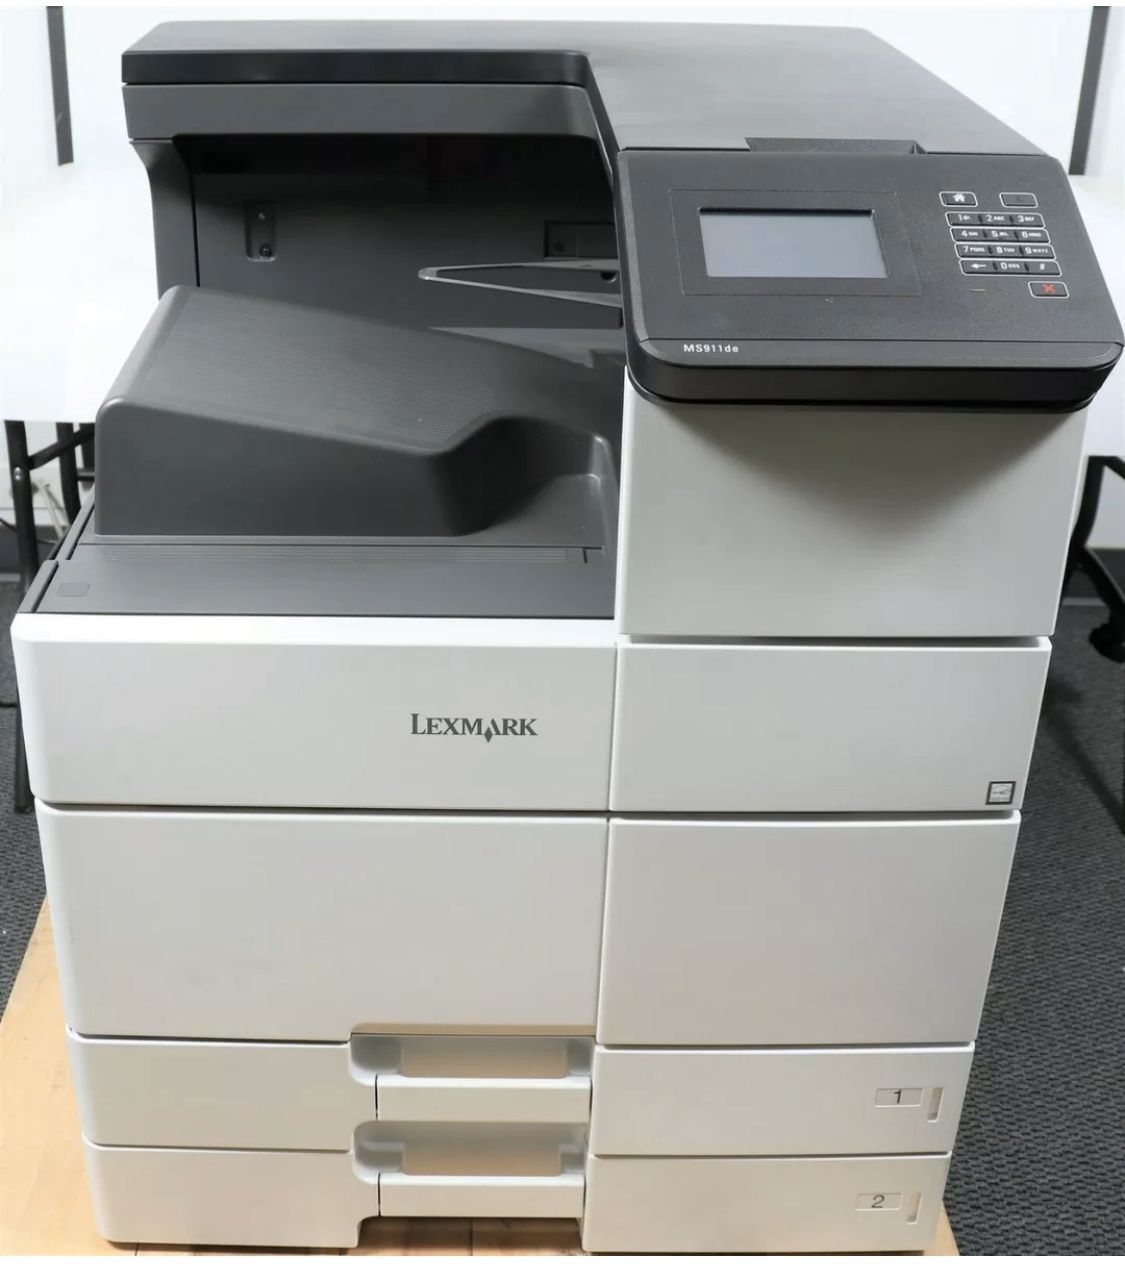 Lexmark MS911de printer